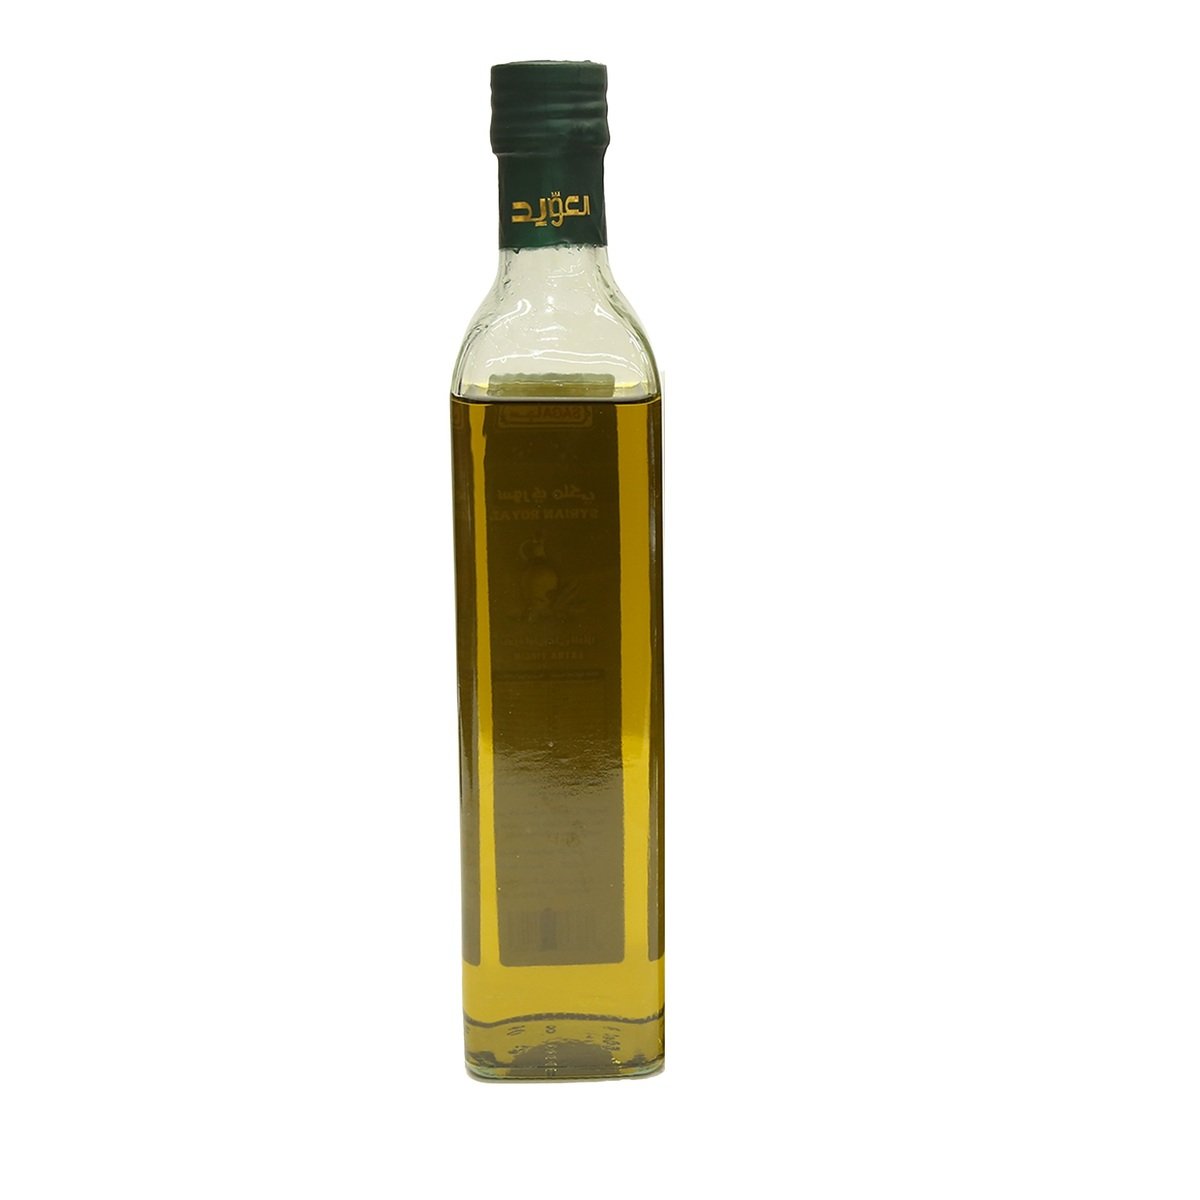 Al Owaid Saga Palestinian Organic Olive Oil 450 ml